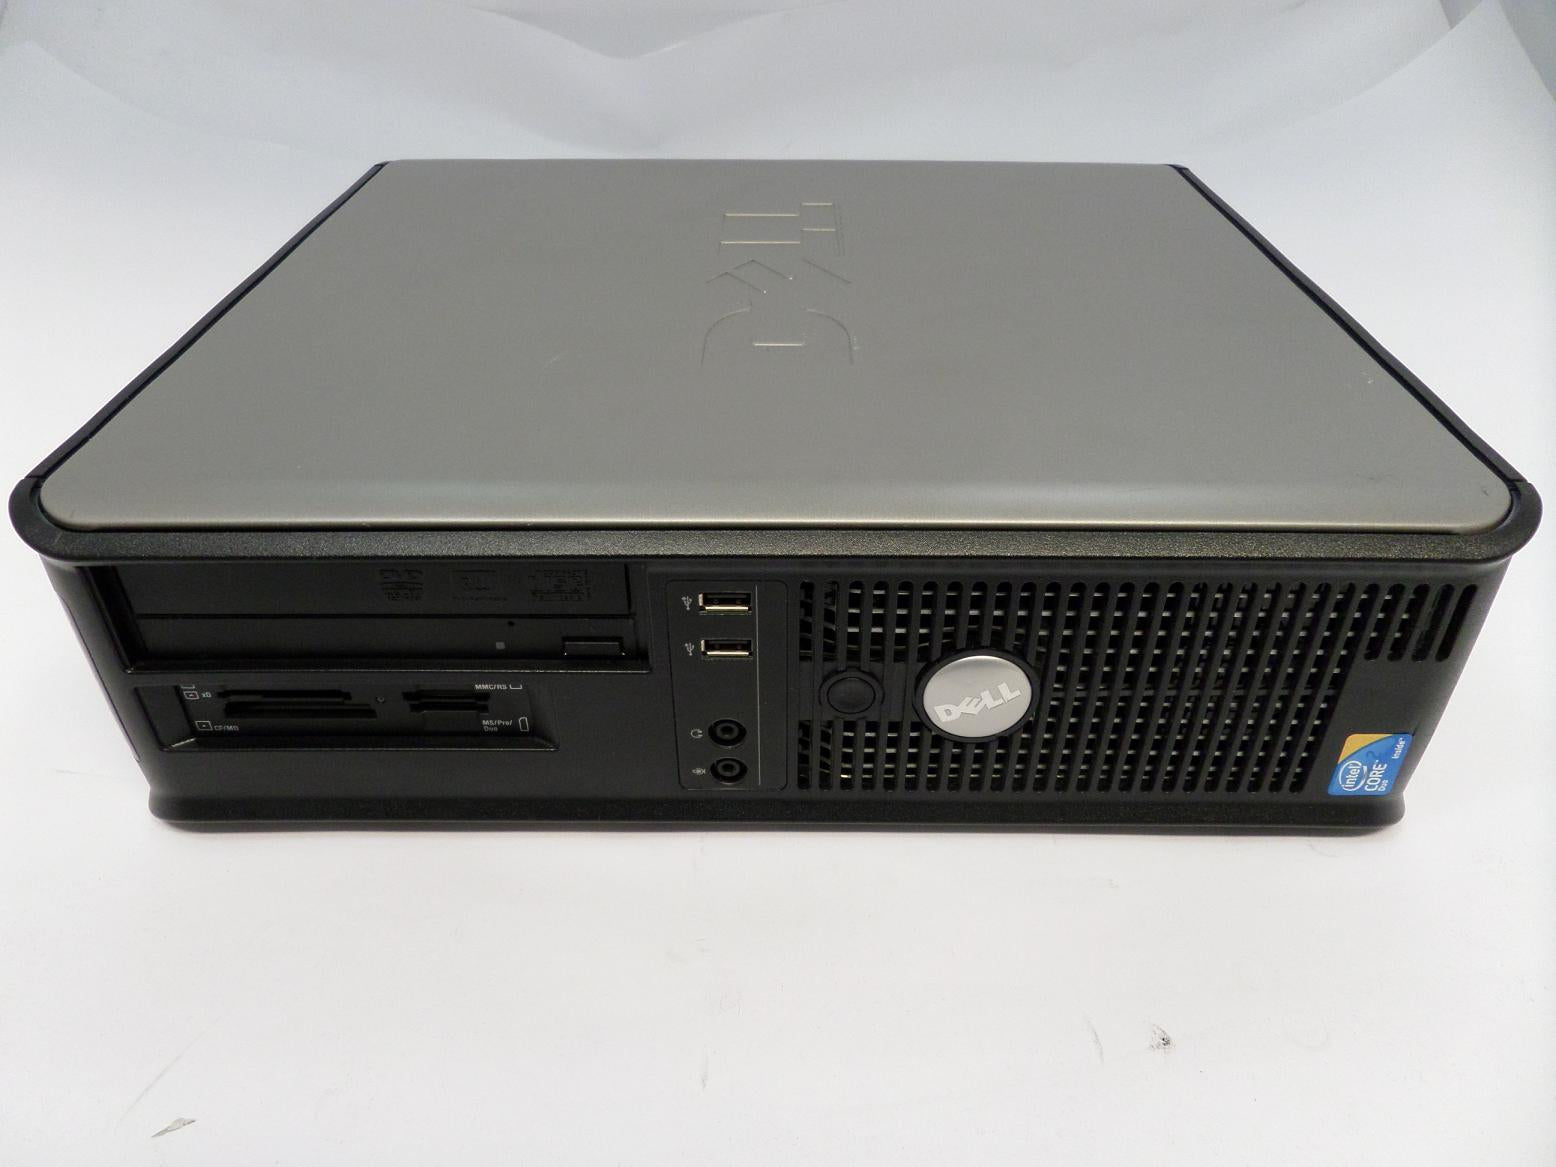 PR24701_Optiplex 780_Dell Optiplex 780 Core 2 Duo 2.93GHz Desktop PC - Image3